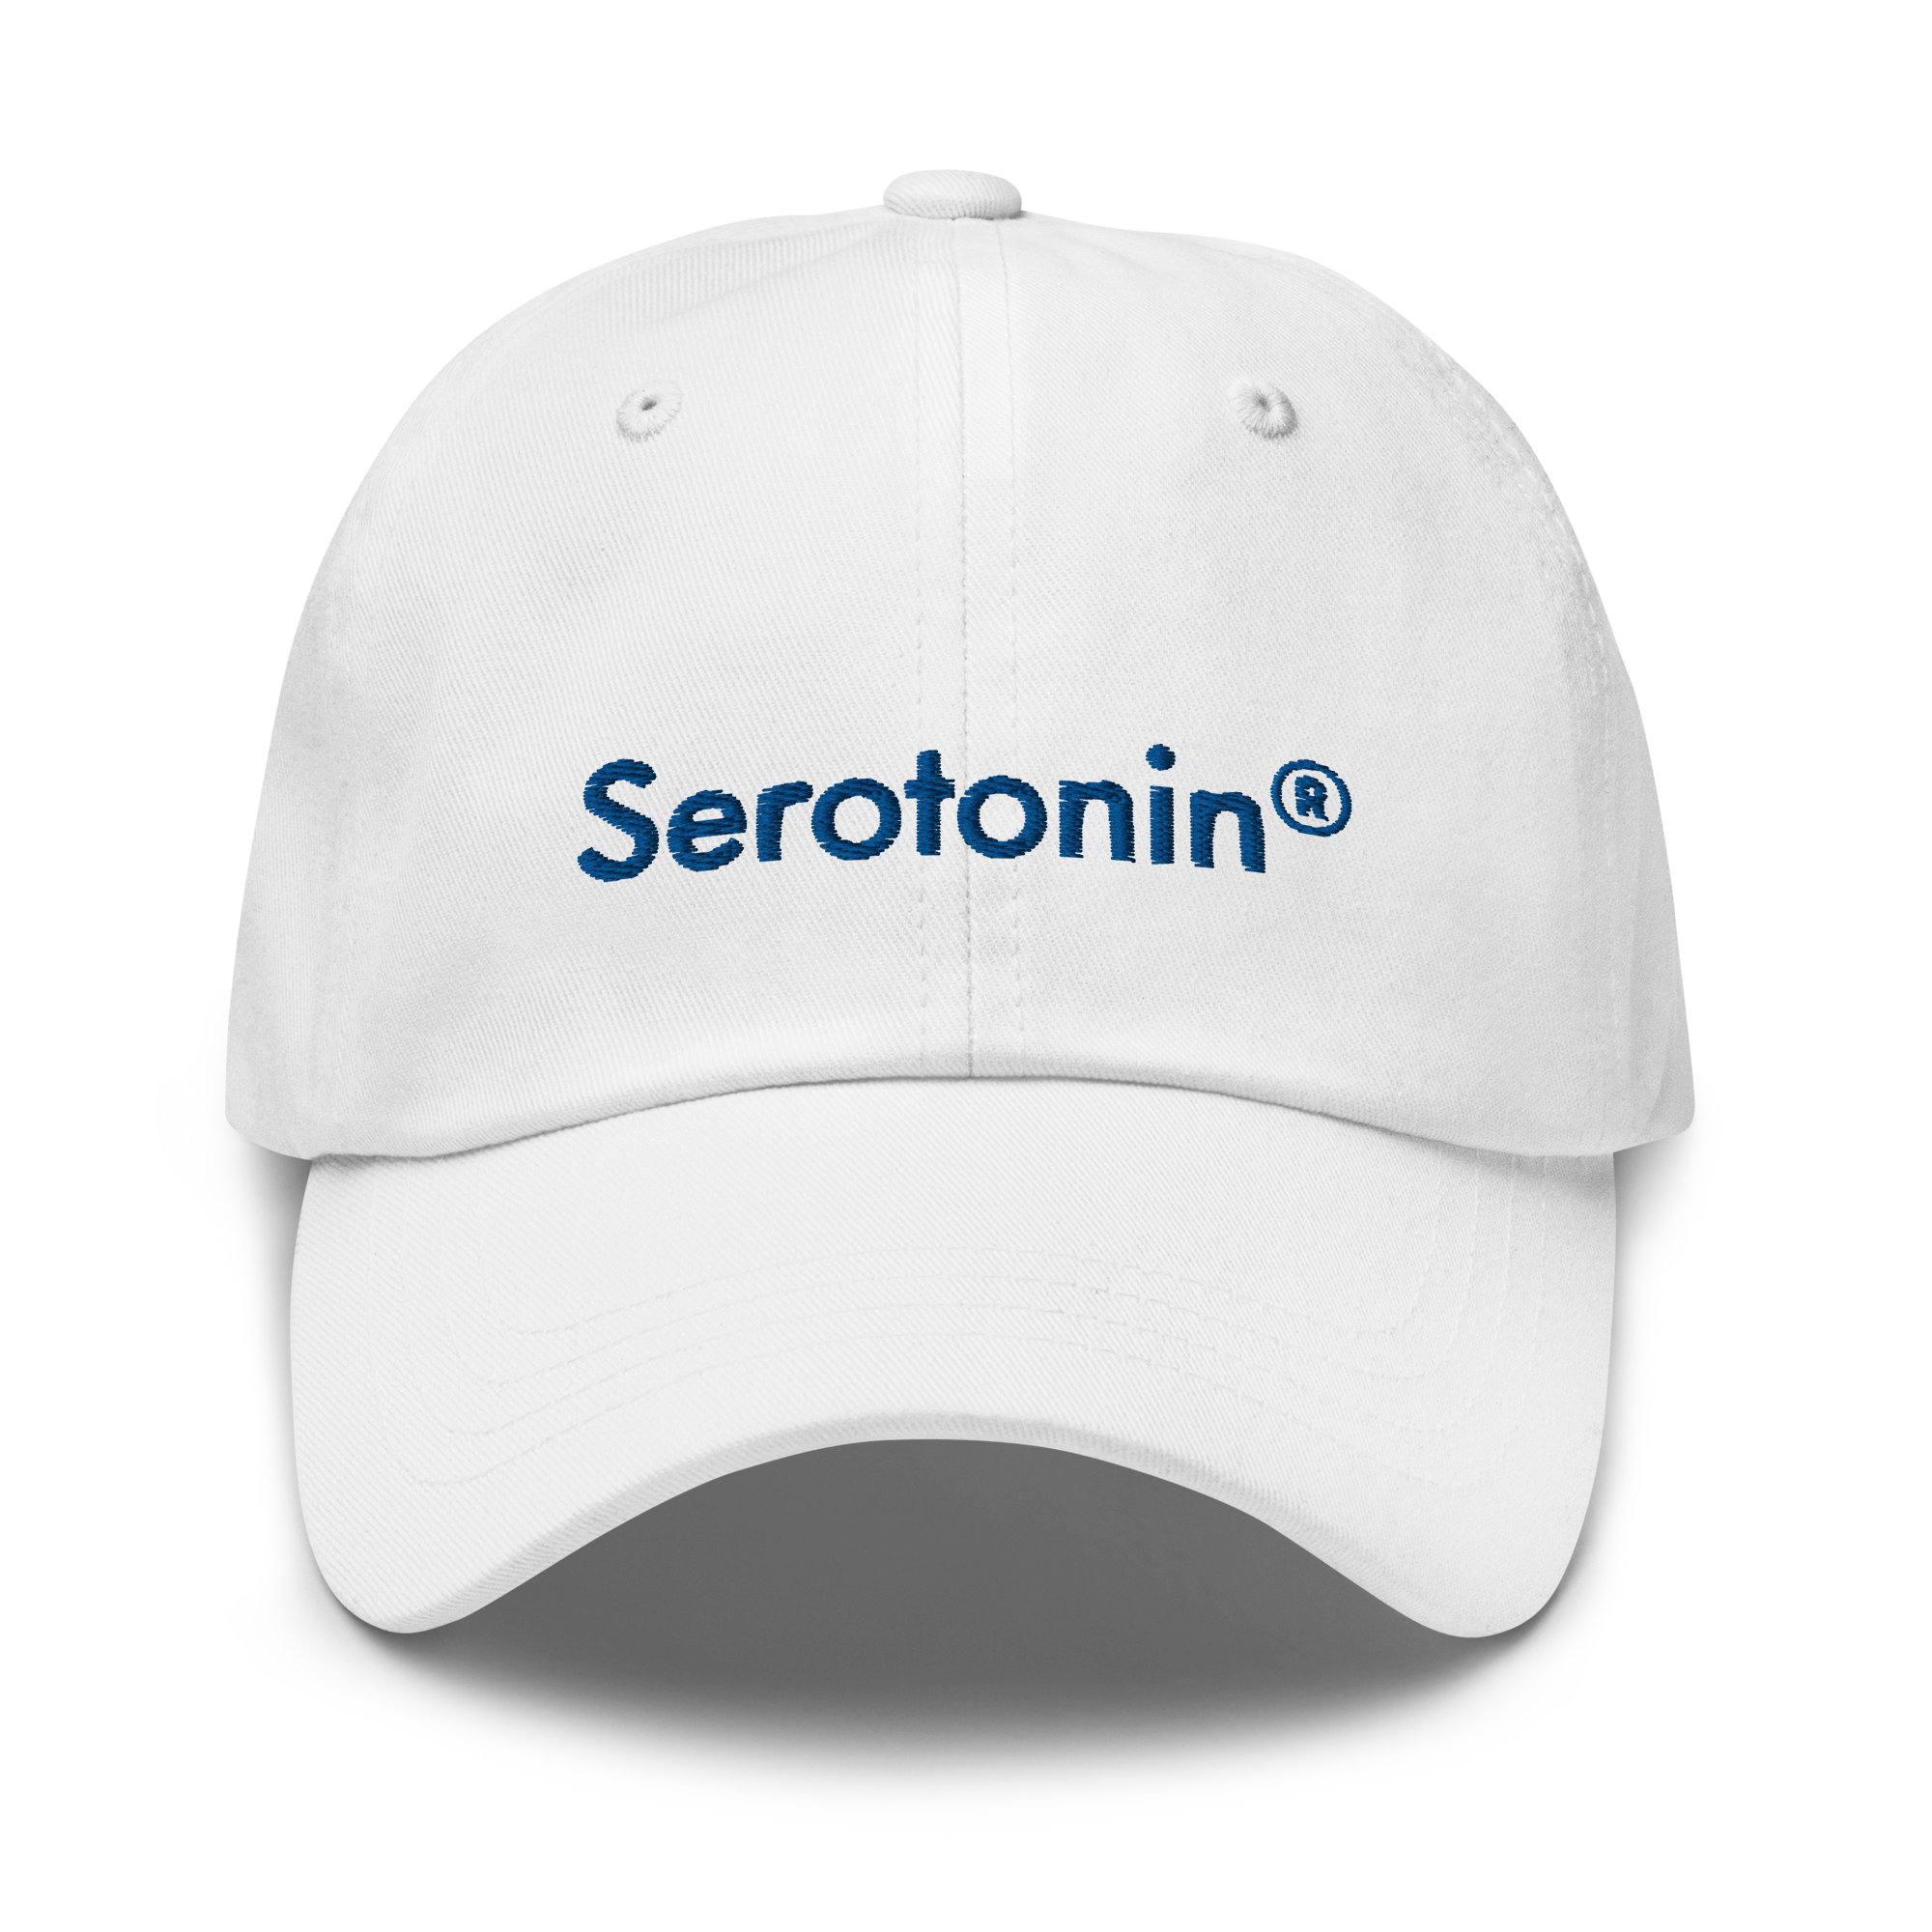 Serotonin gear